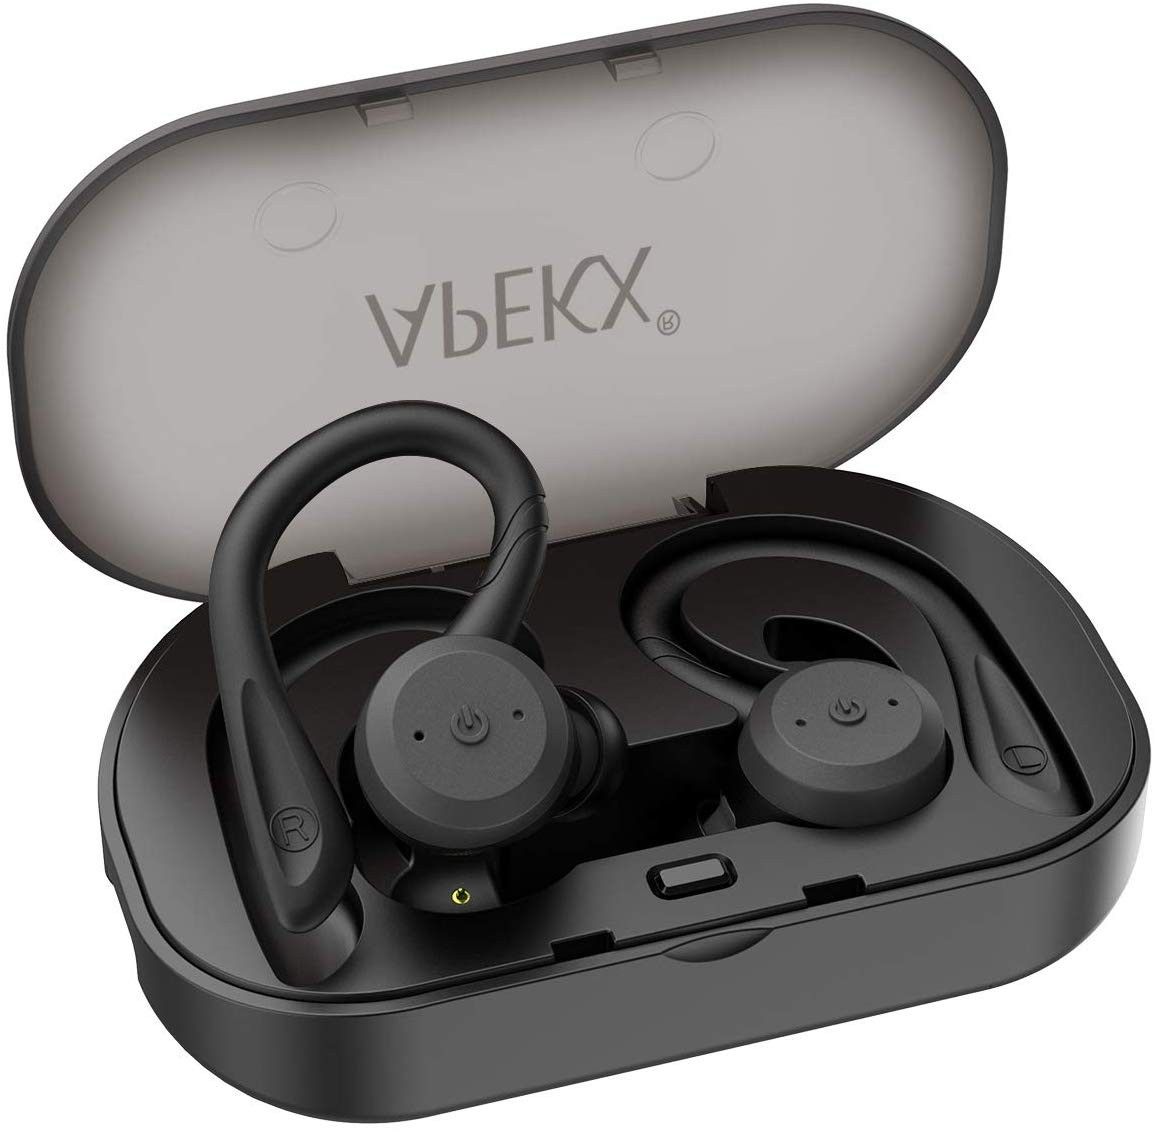 APEKX True Wireless Bluetooth 5.0 Sports Earbuds IPX7 Waterproof Mic